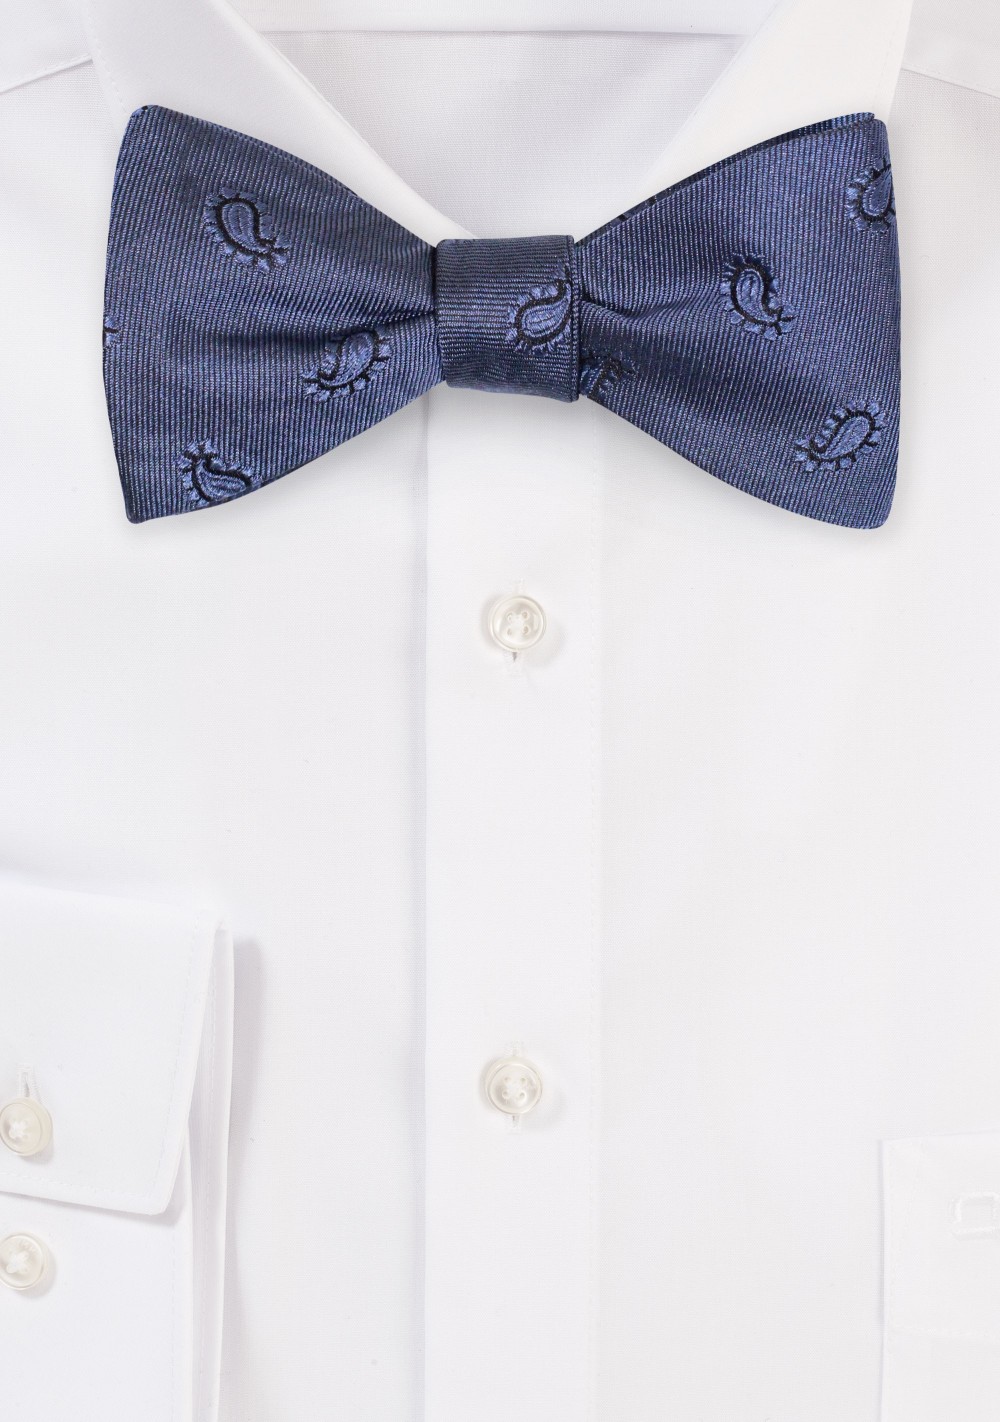 Steel Blue Paisley Silk Bow Tie in Self-Tie Style